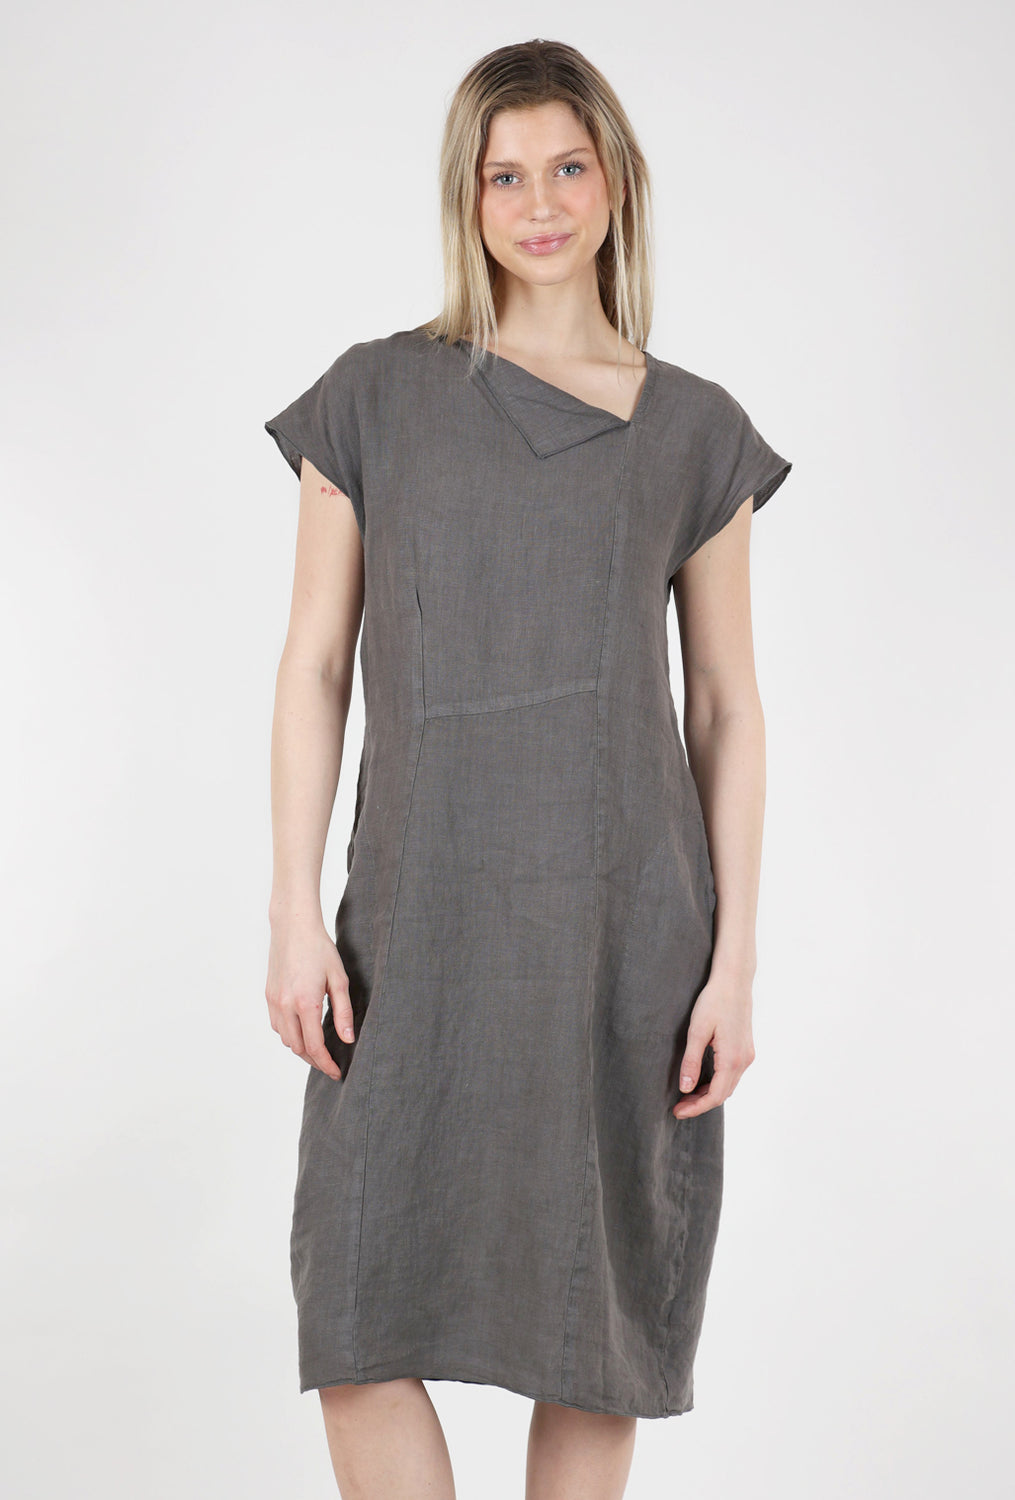 Fenini Drape-Neck Linen Dress, Dusk Gray 